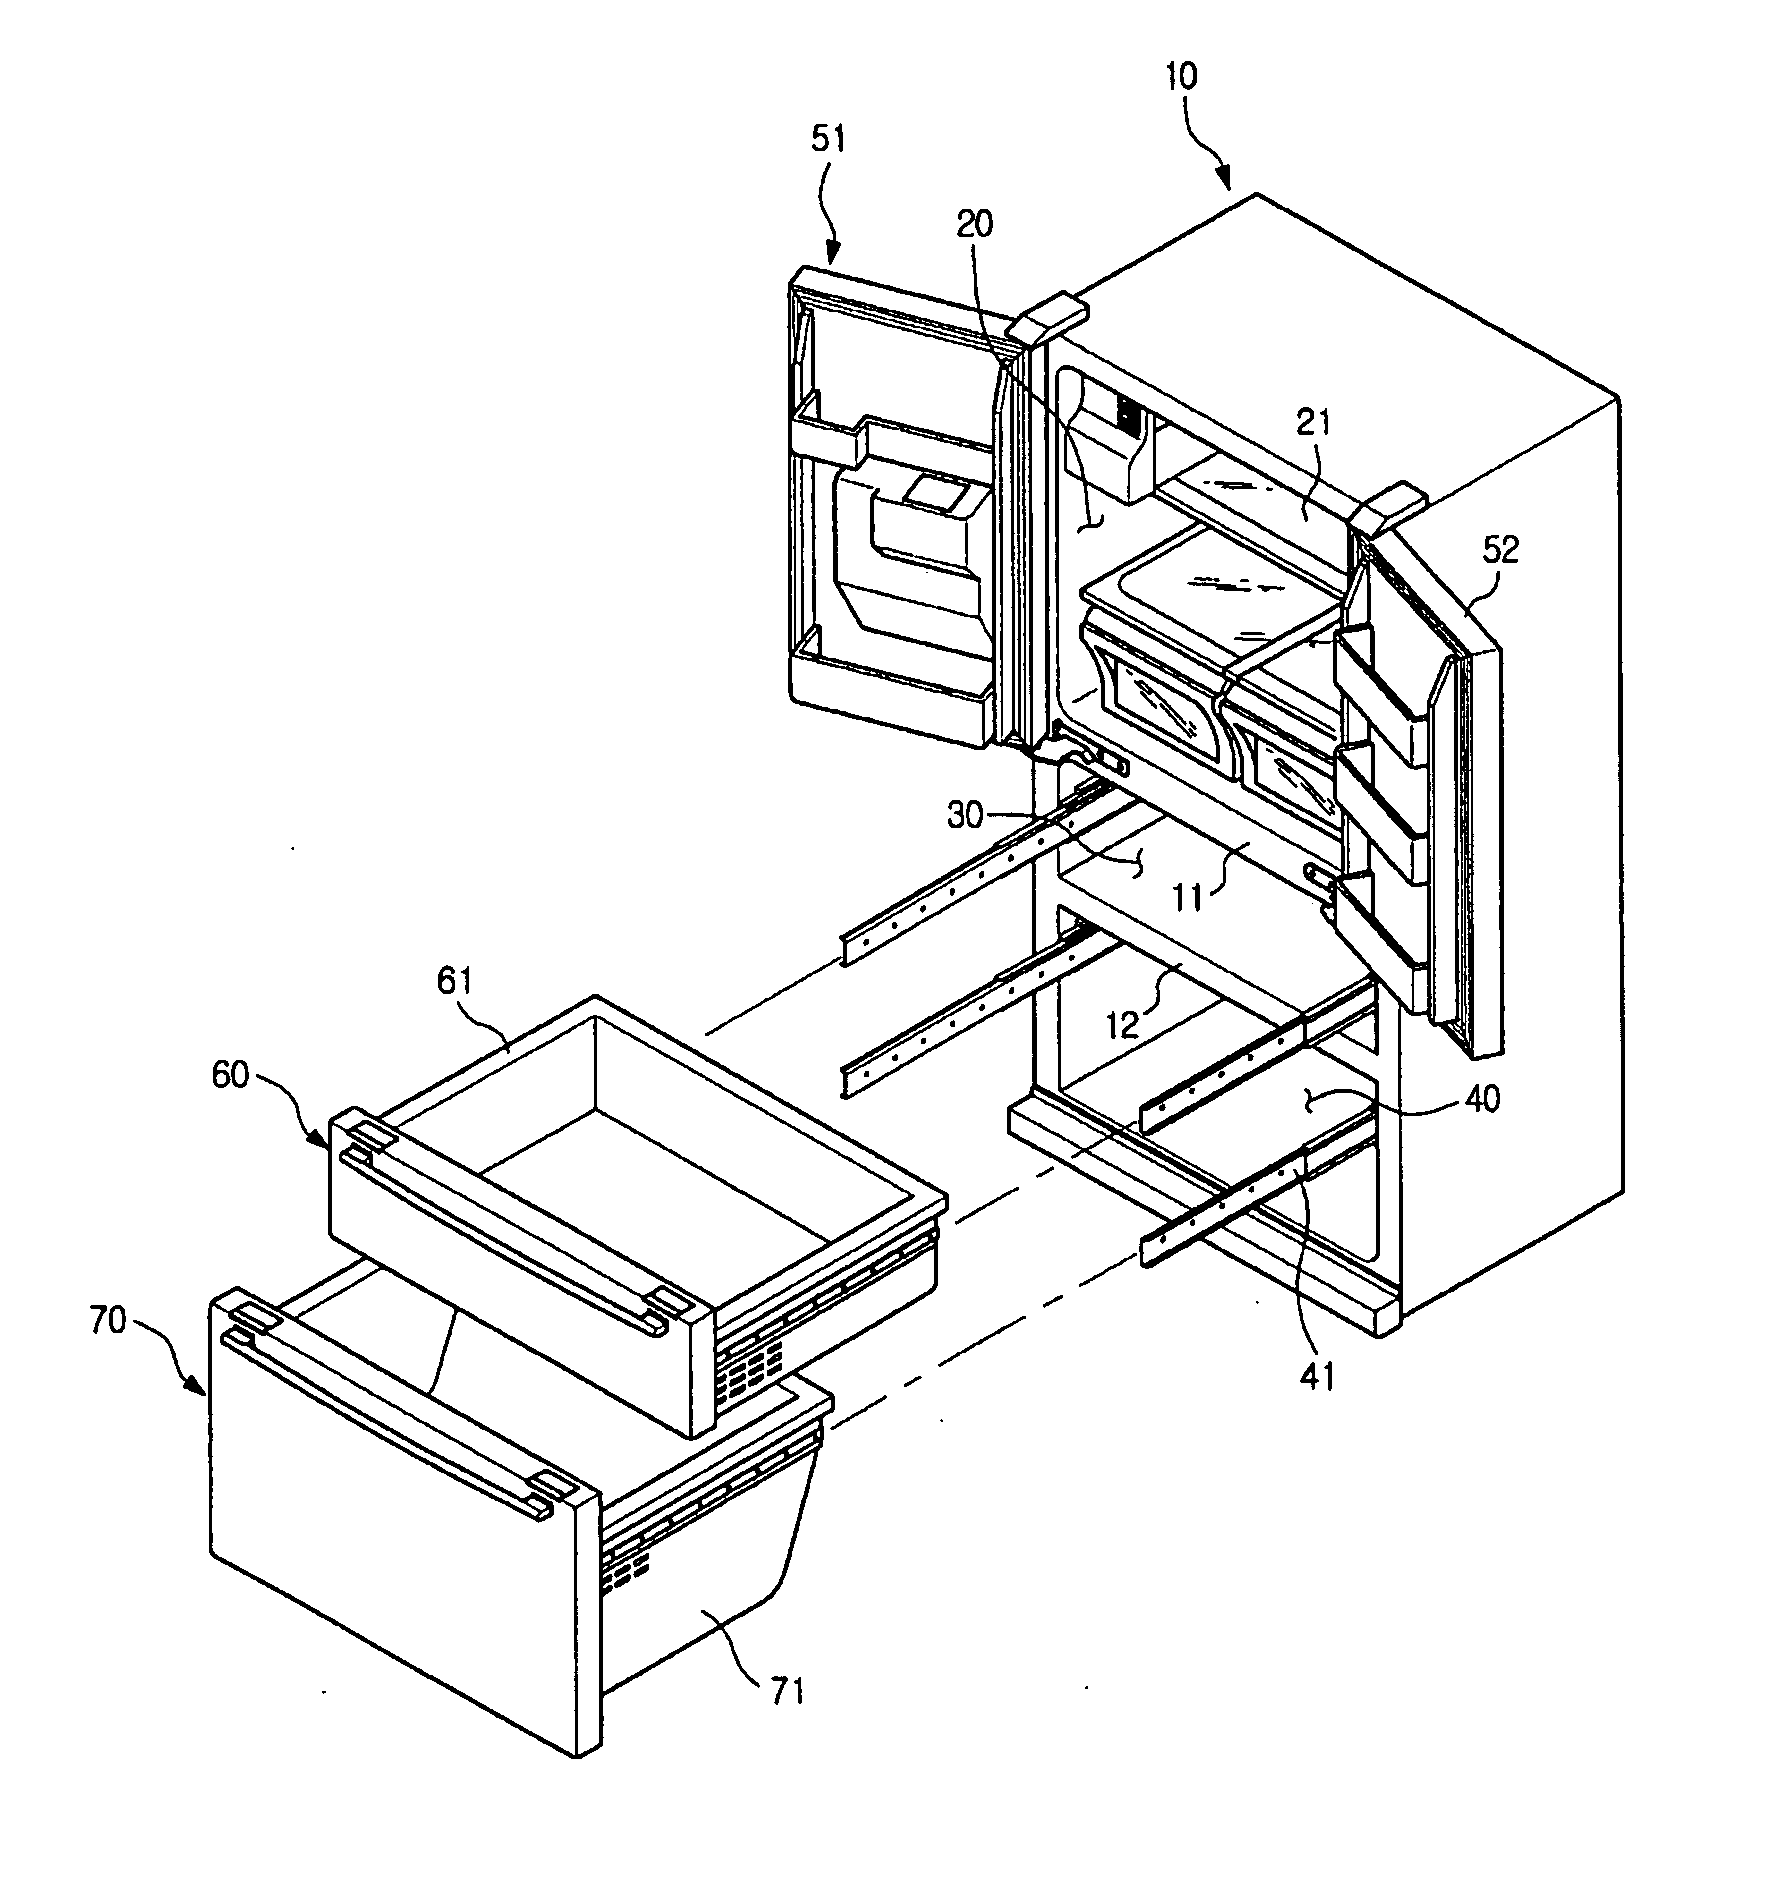 Refrigerator having door opening apparatus